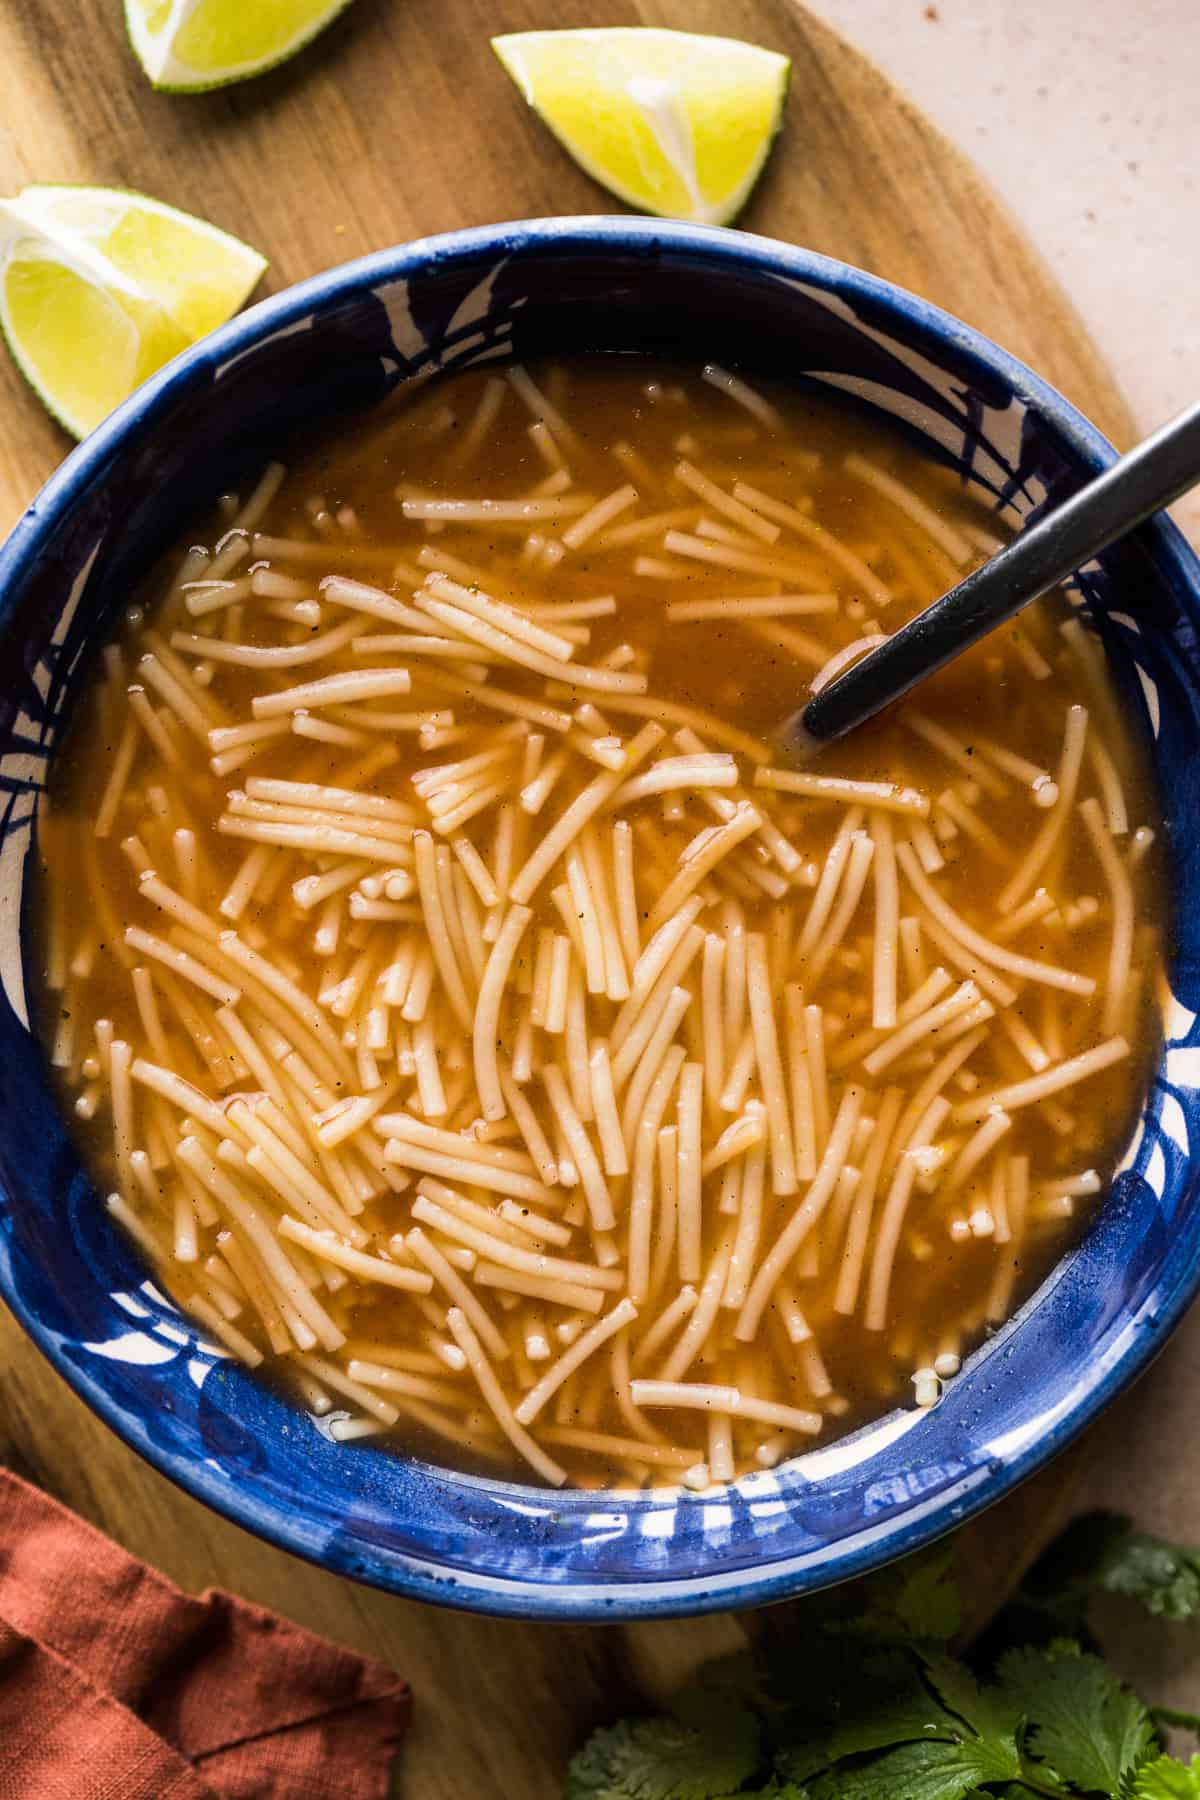 Sopa de Fideo (Mexican noodle soup) in a bowl ready to eat.